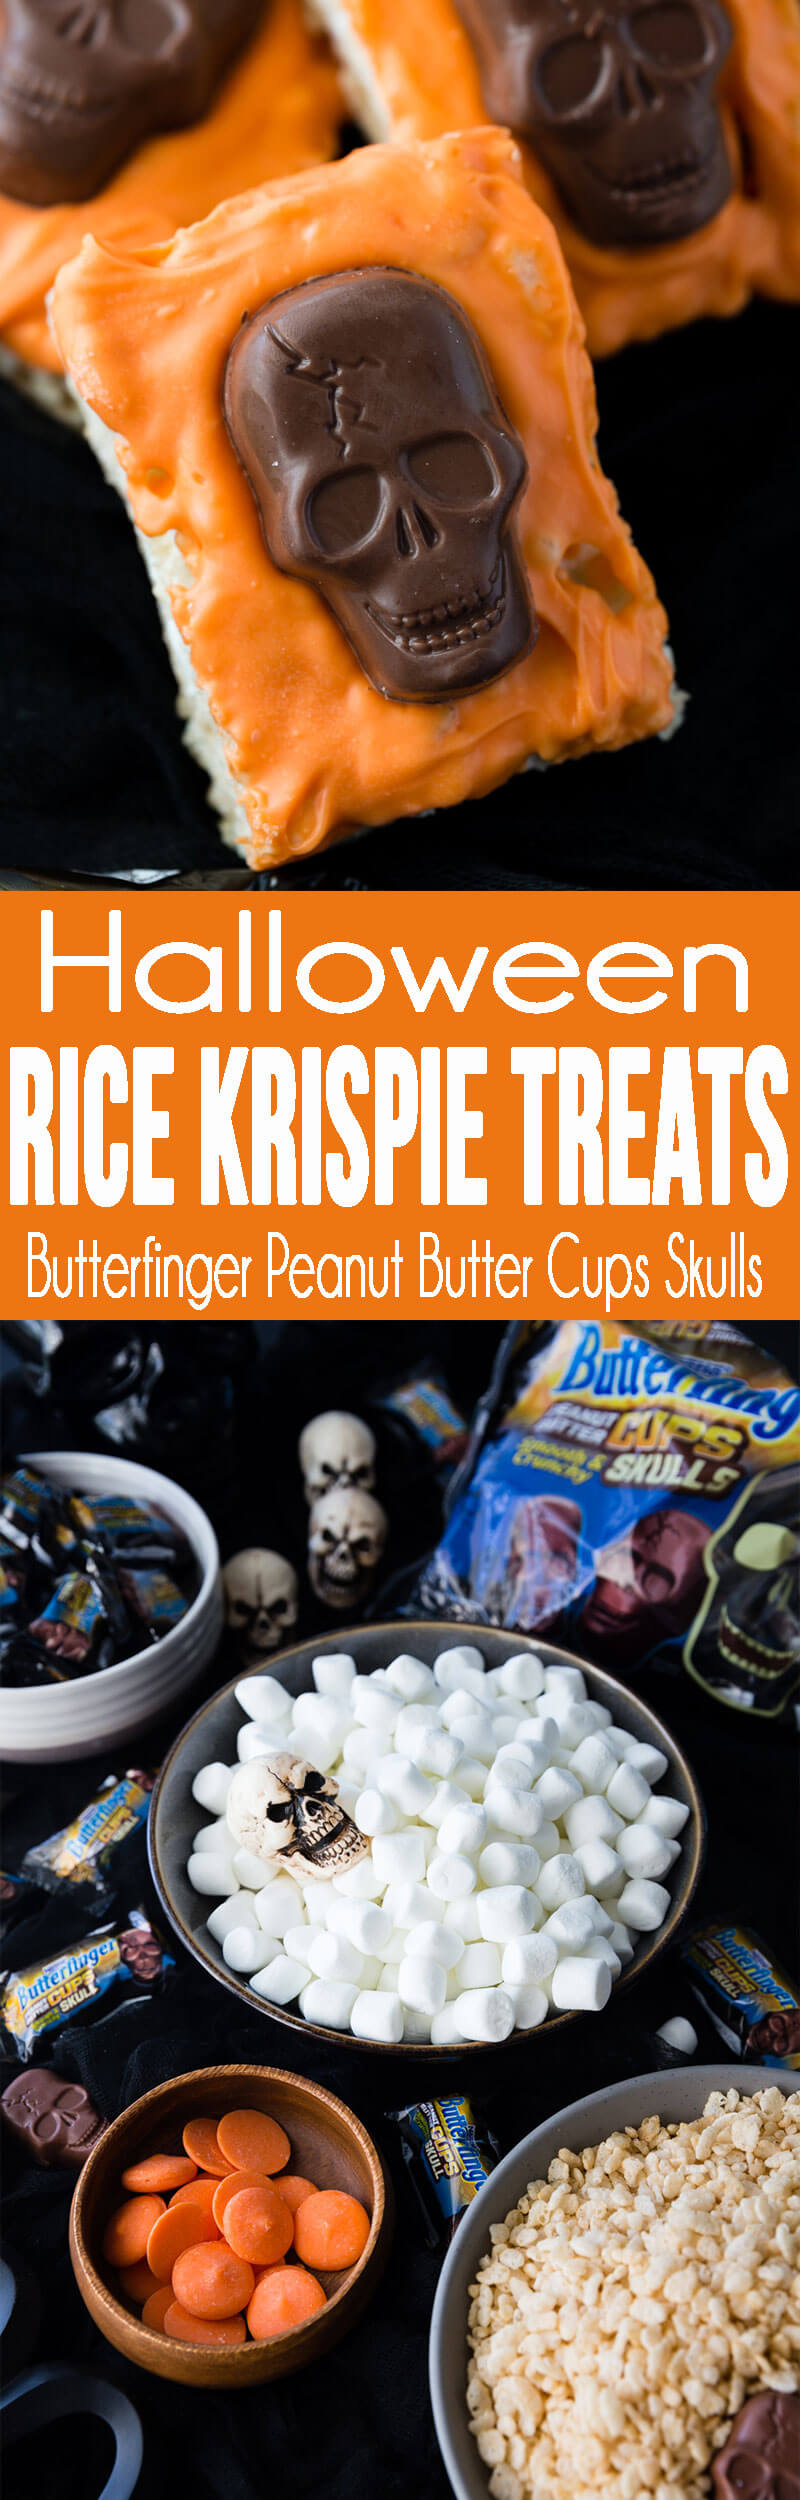 How to make Halloween Rice Krispie Treats with Butterfinger Peanut Butter Skulls